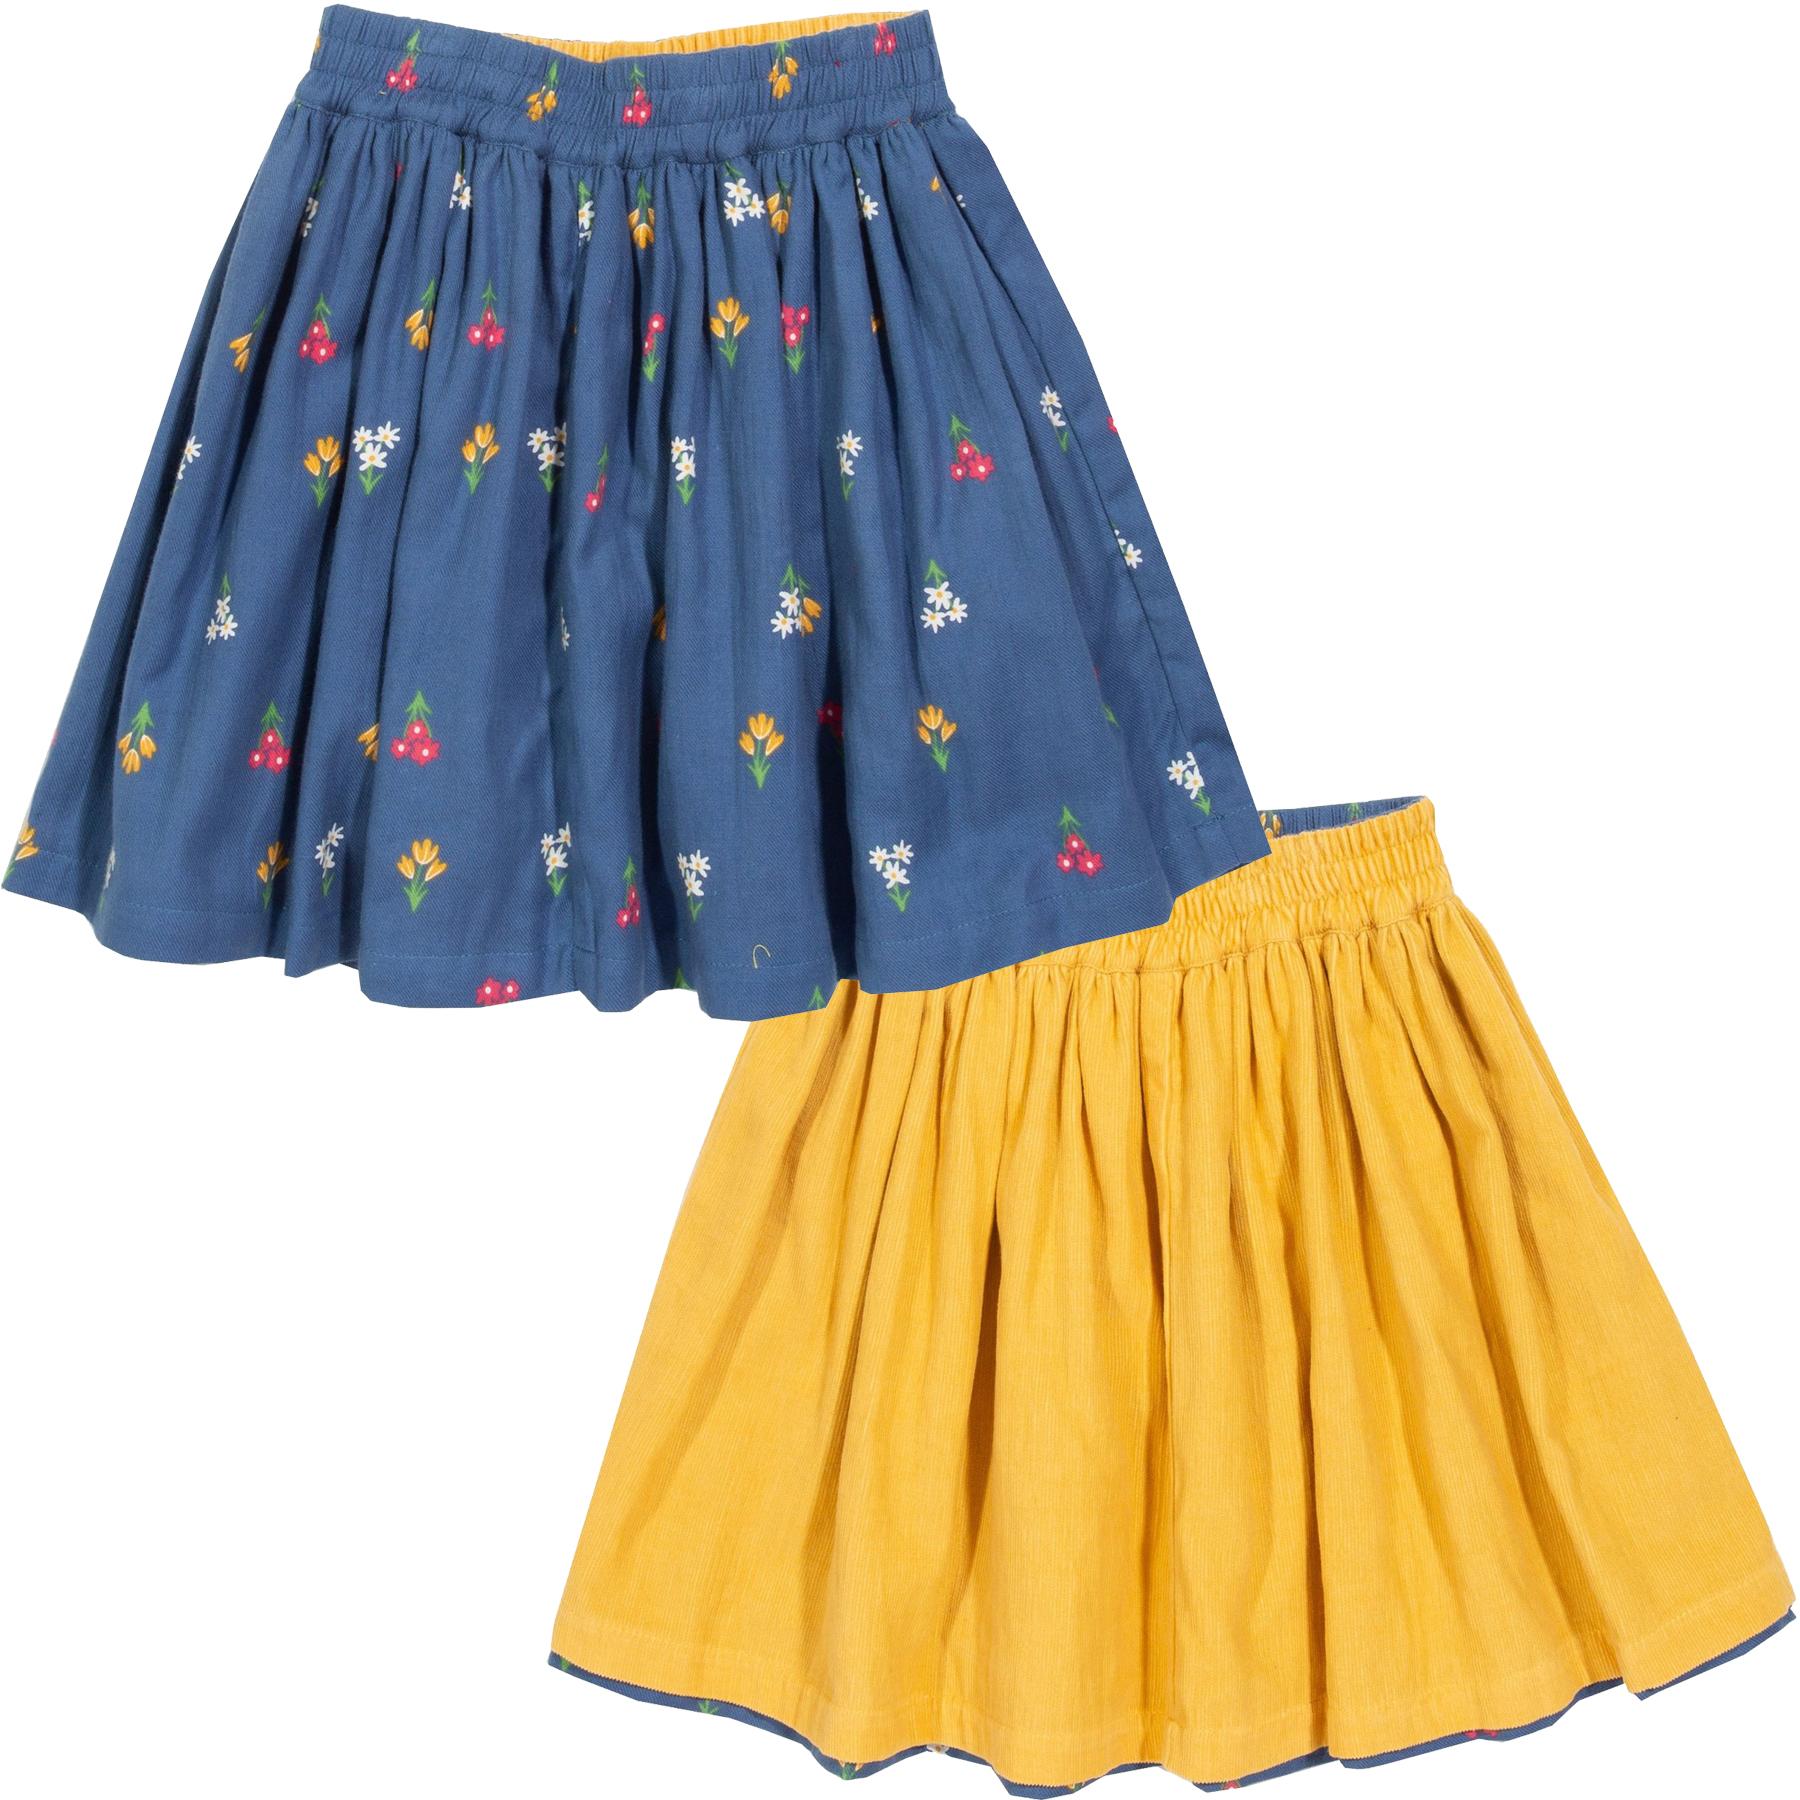 Kite Clothing Posey Reversible Skirt